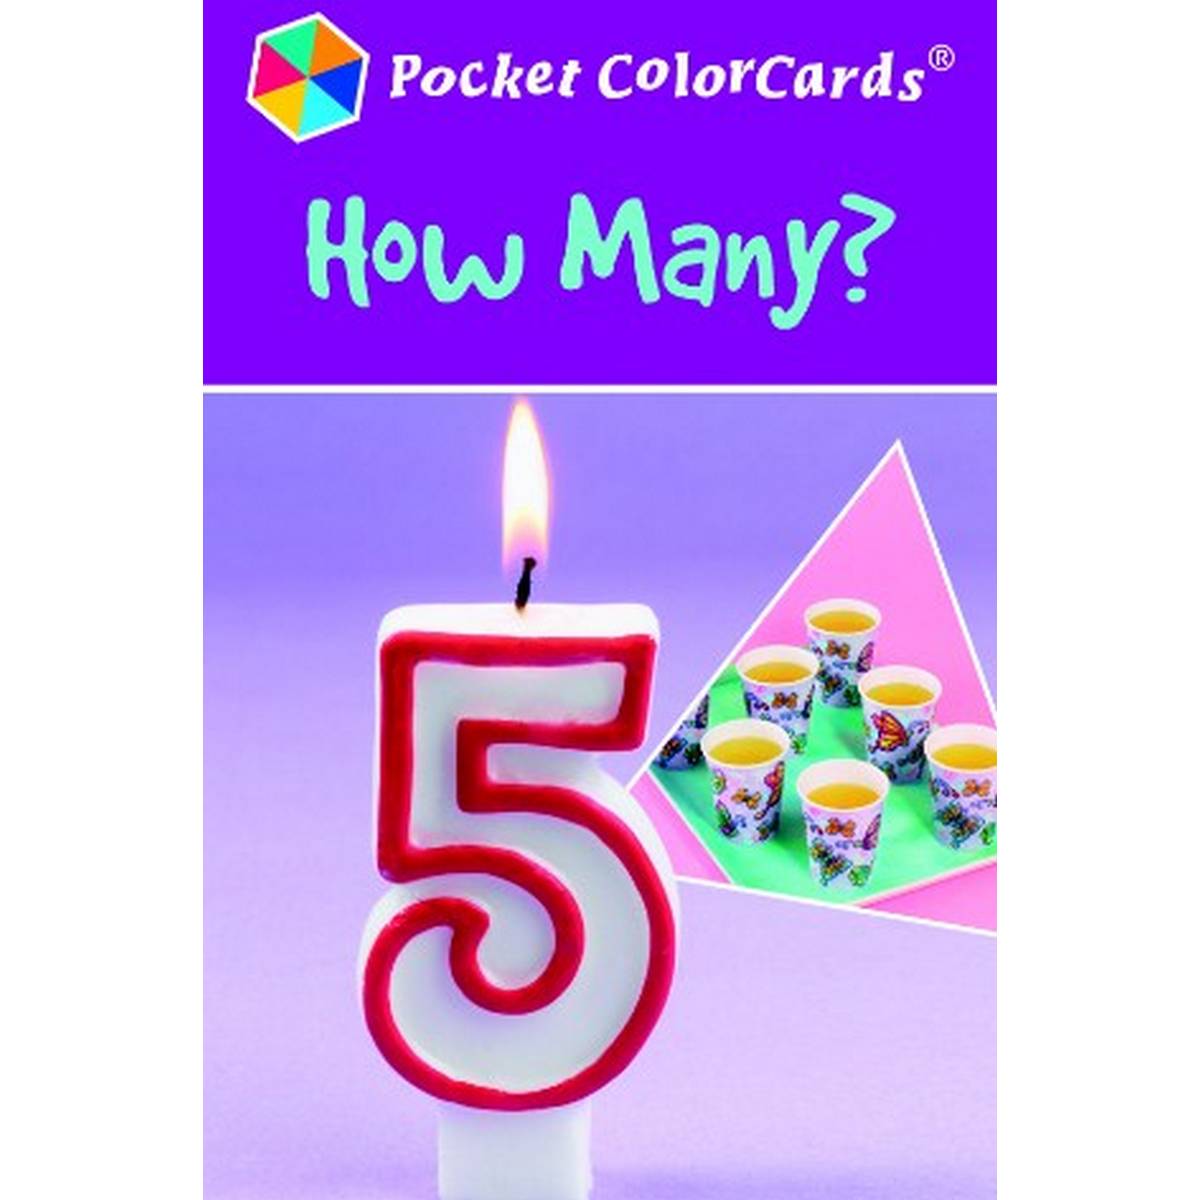 Pocket ColorCards: How Many?